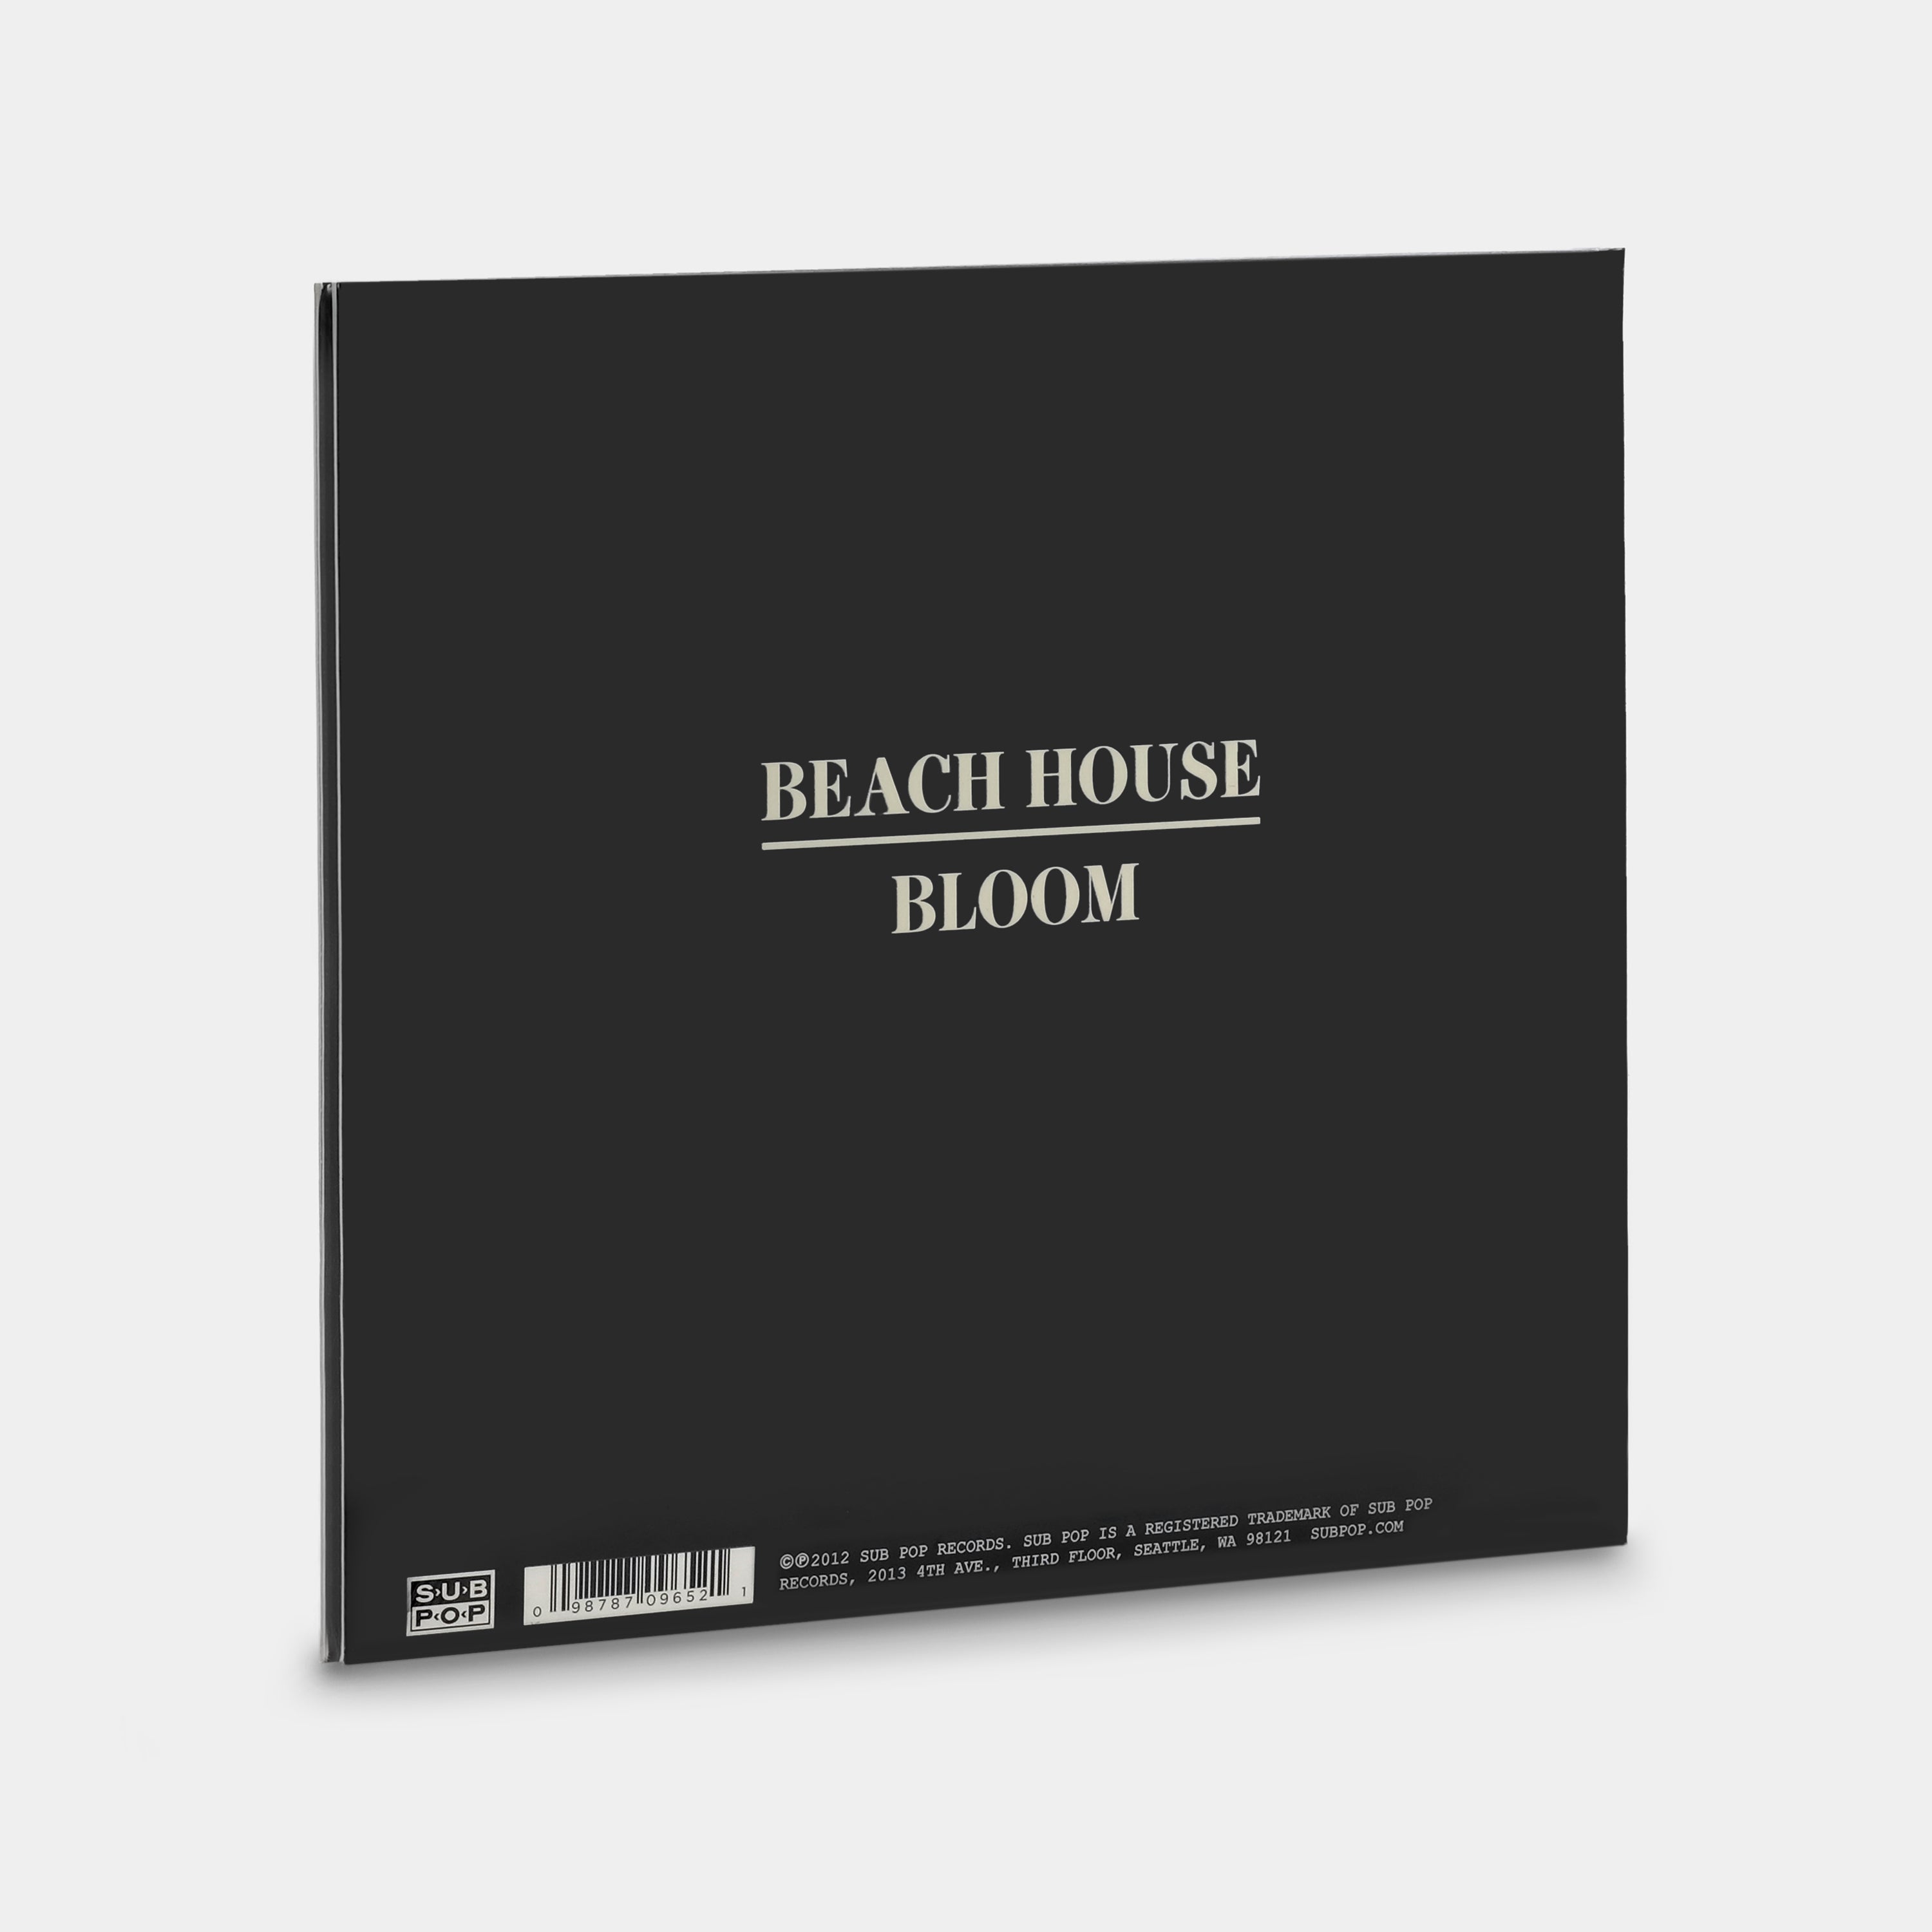 Beach House - Bloom CD